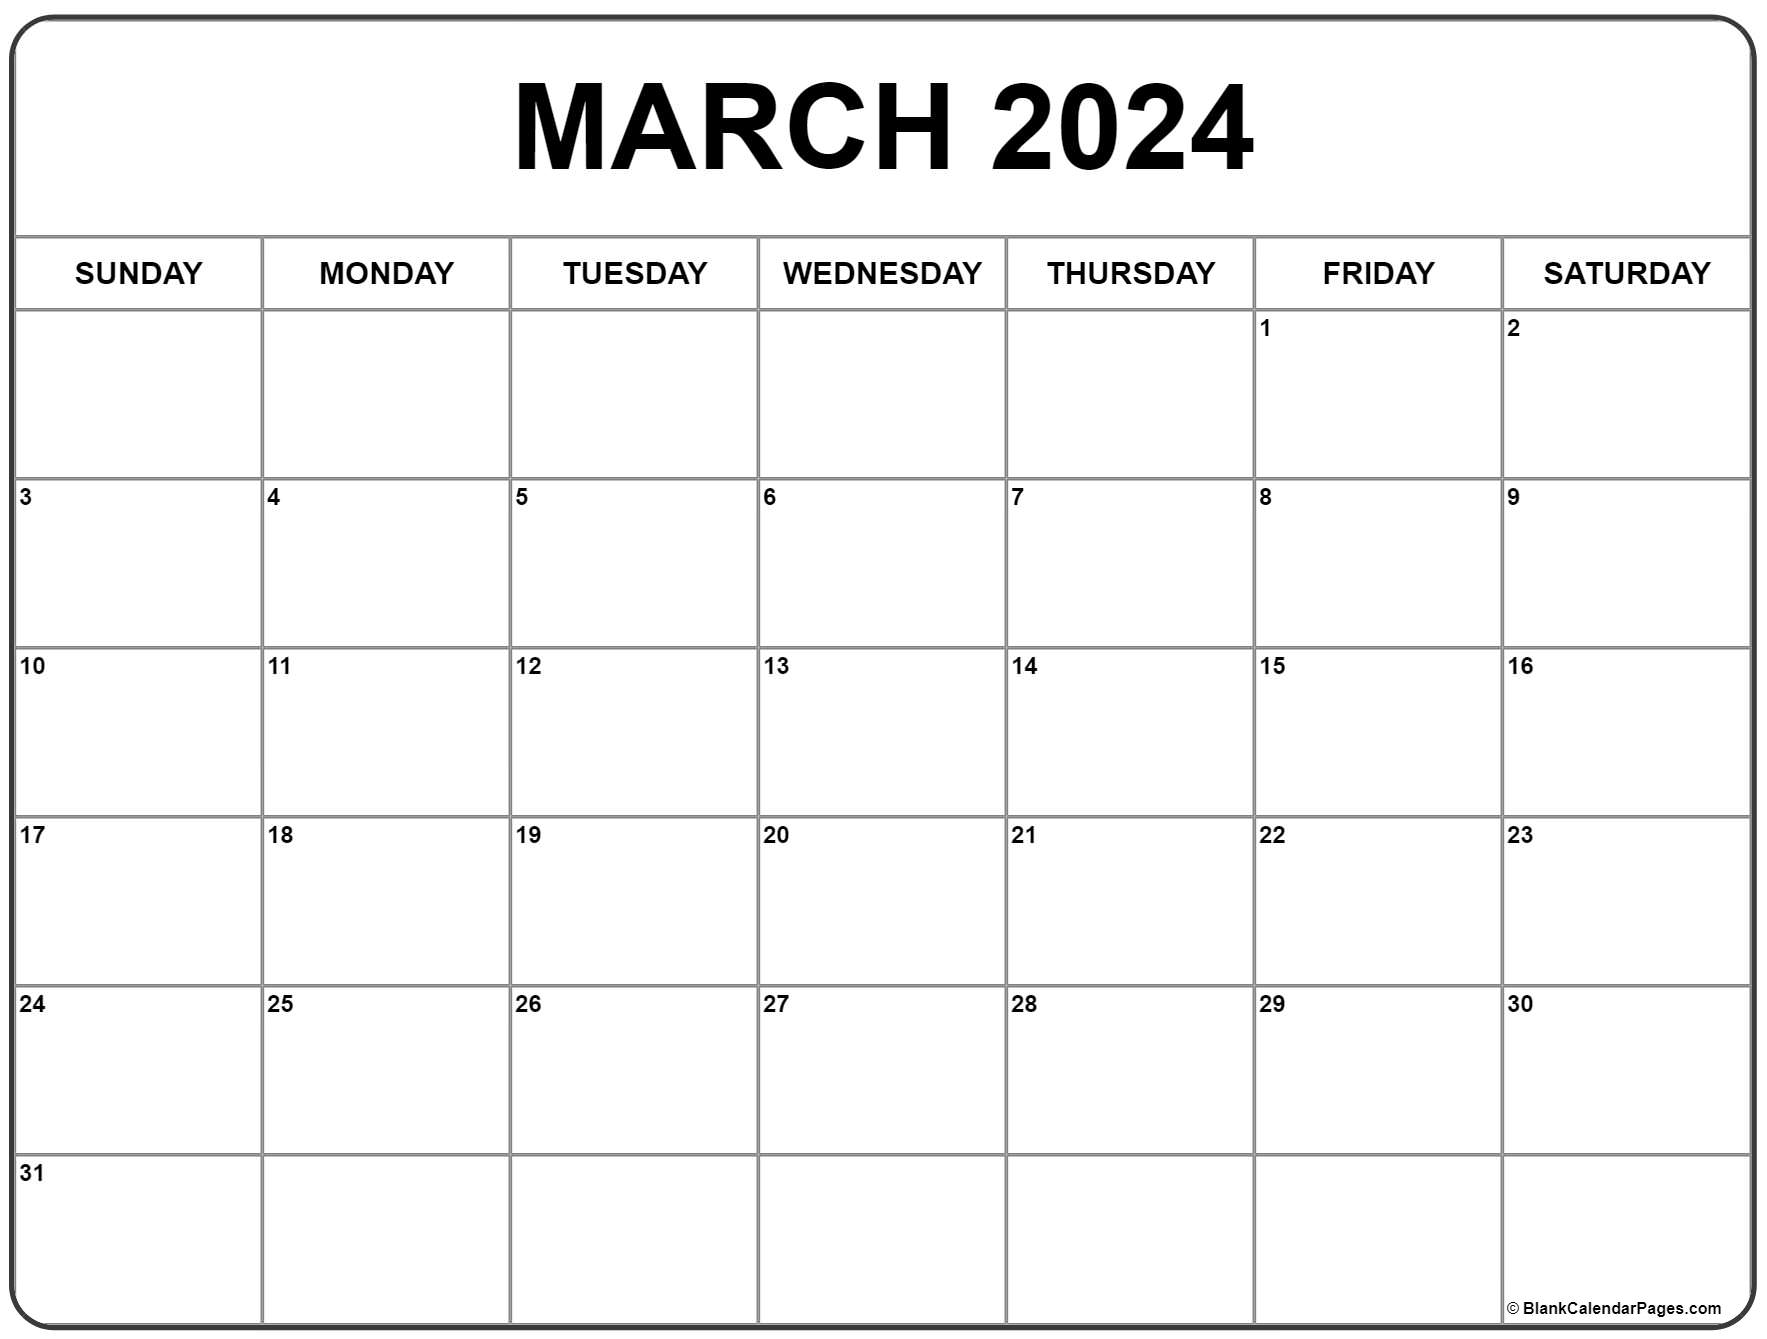 March 2024 Calendar | Free Printable Calendar for Free Printable 2024 March Calendar